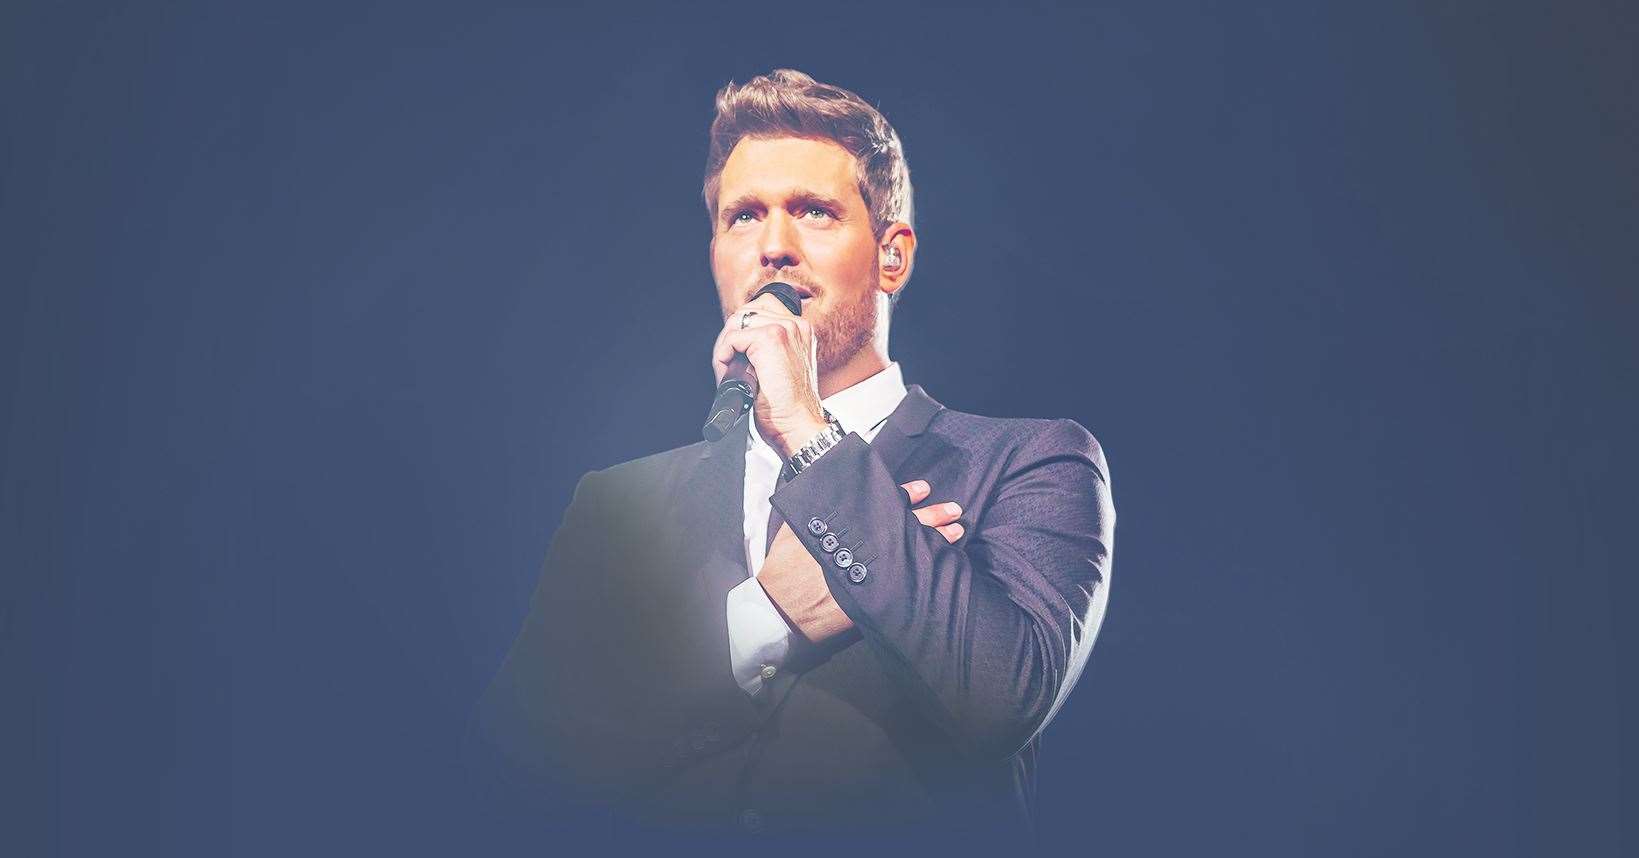 Superstar Michael Buble